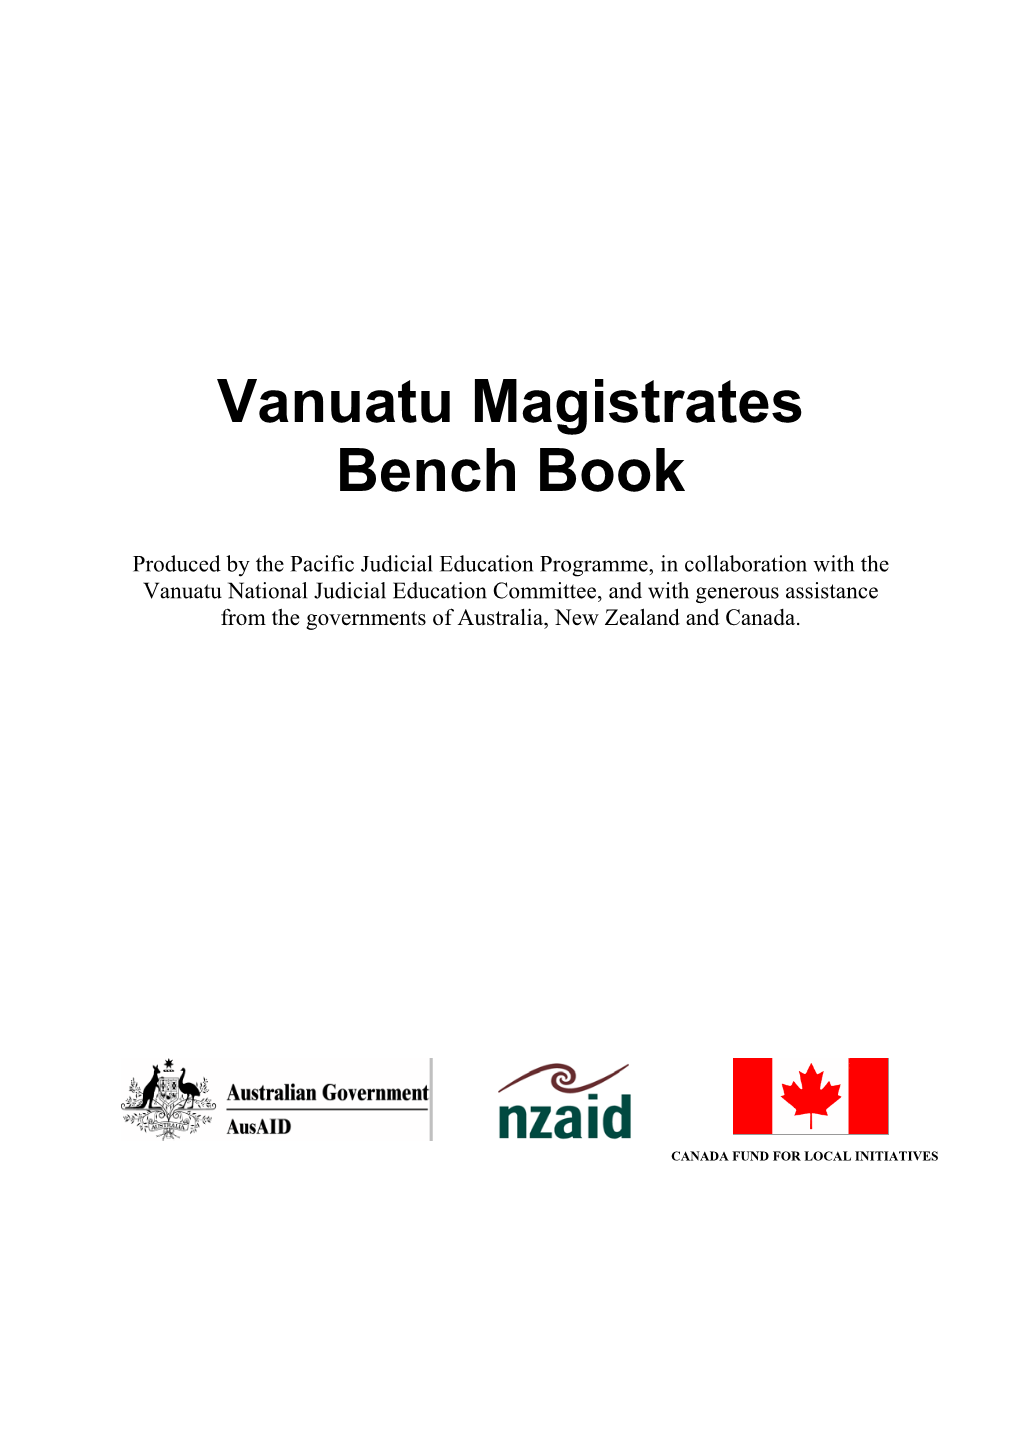 Vanuatu Magistrates Bench Book